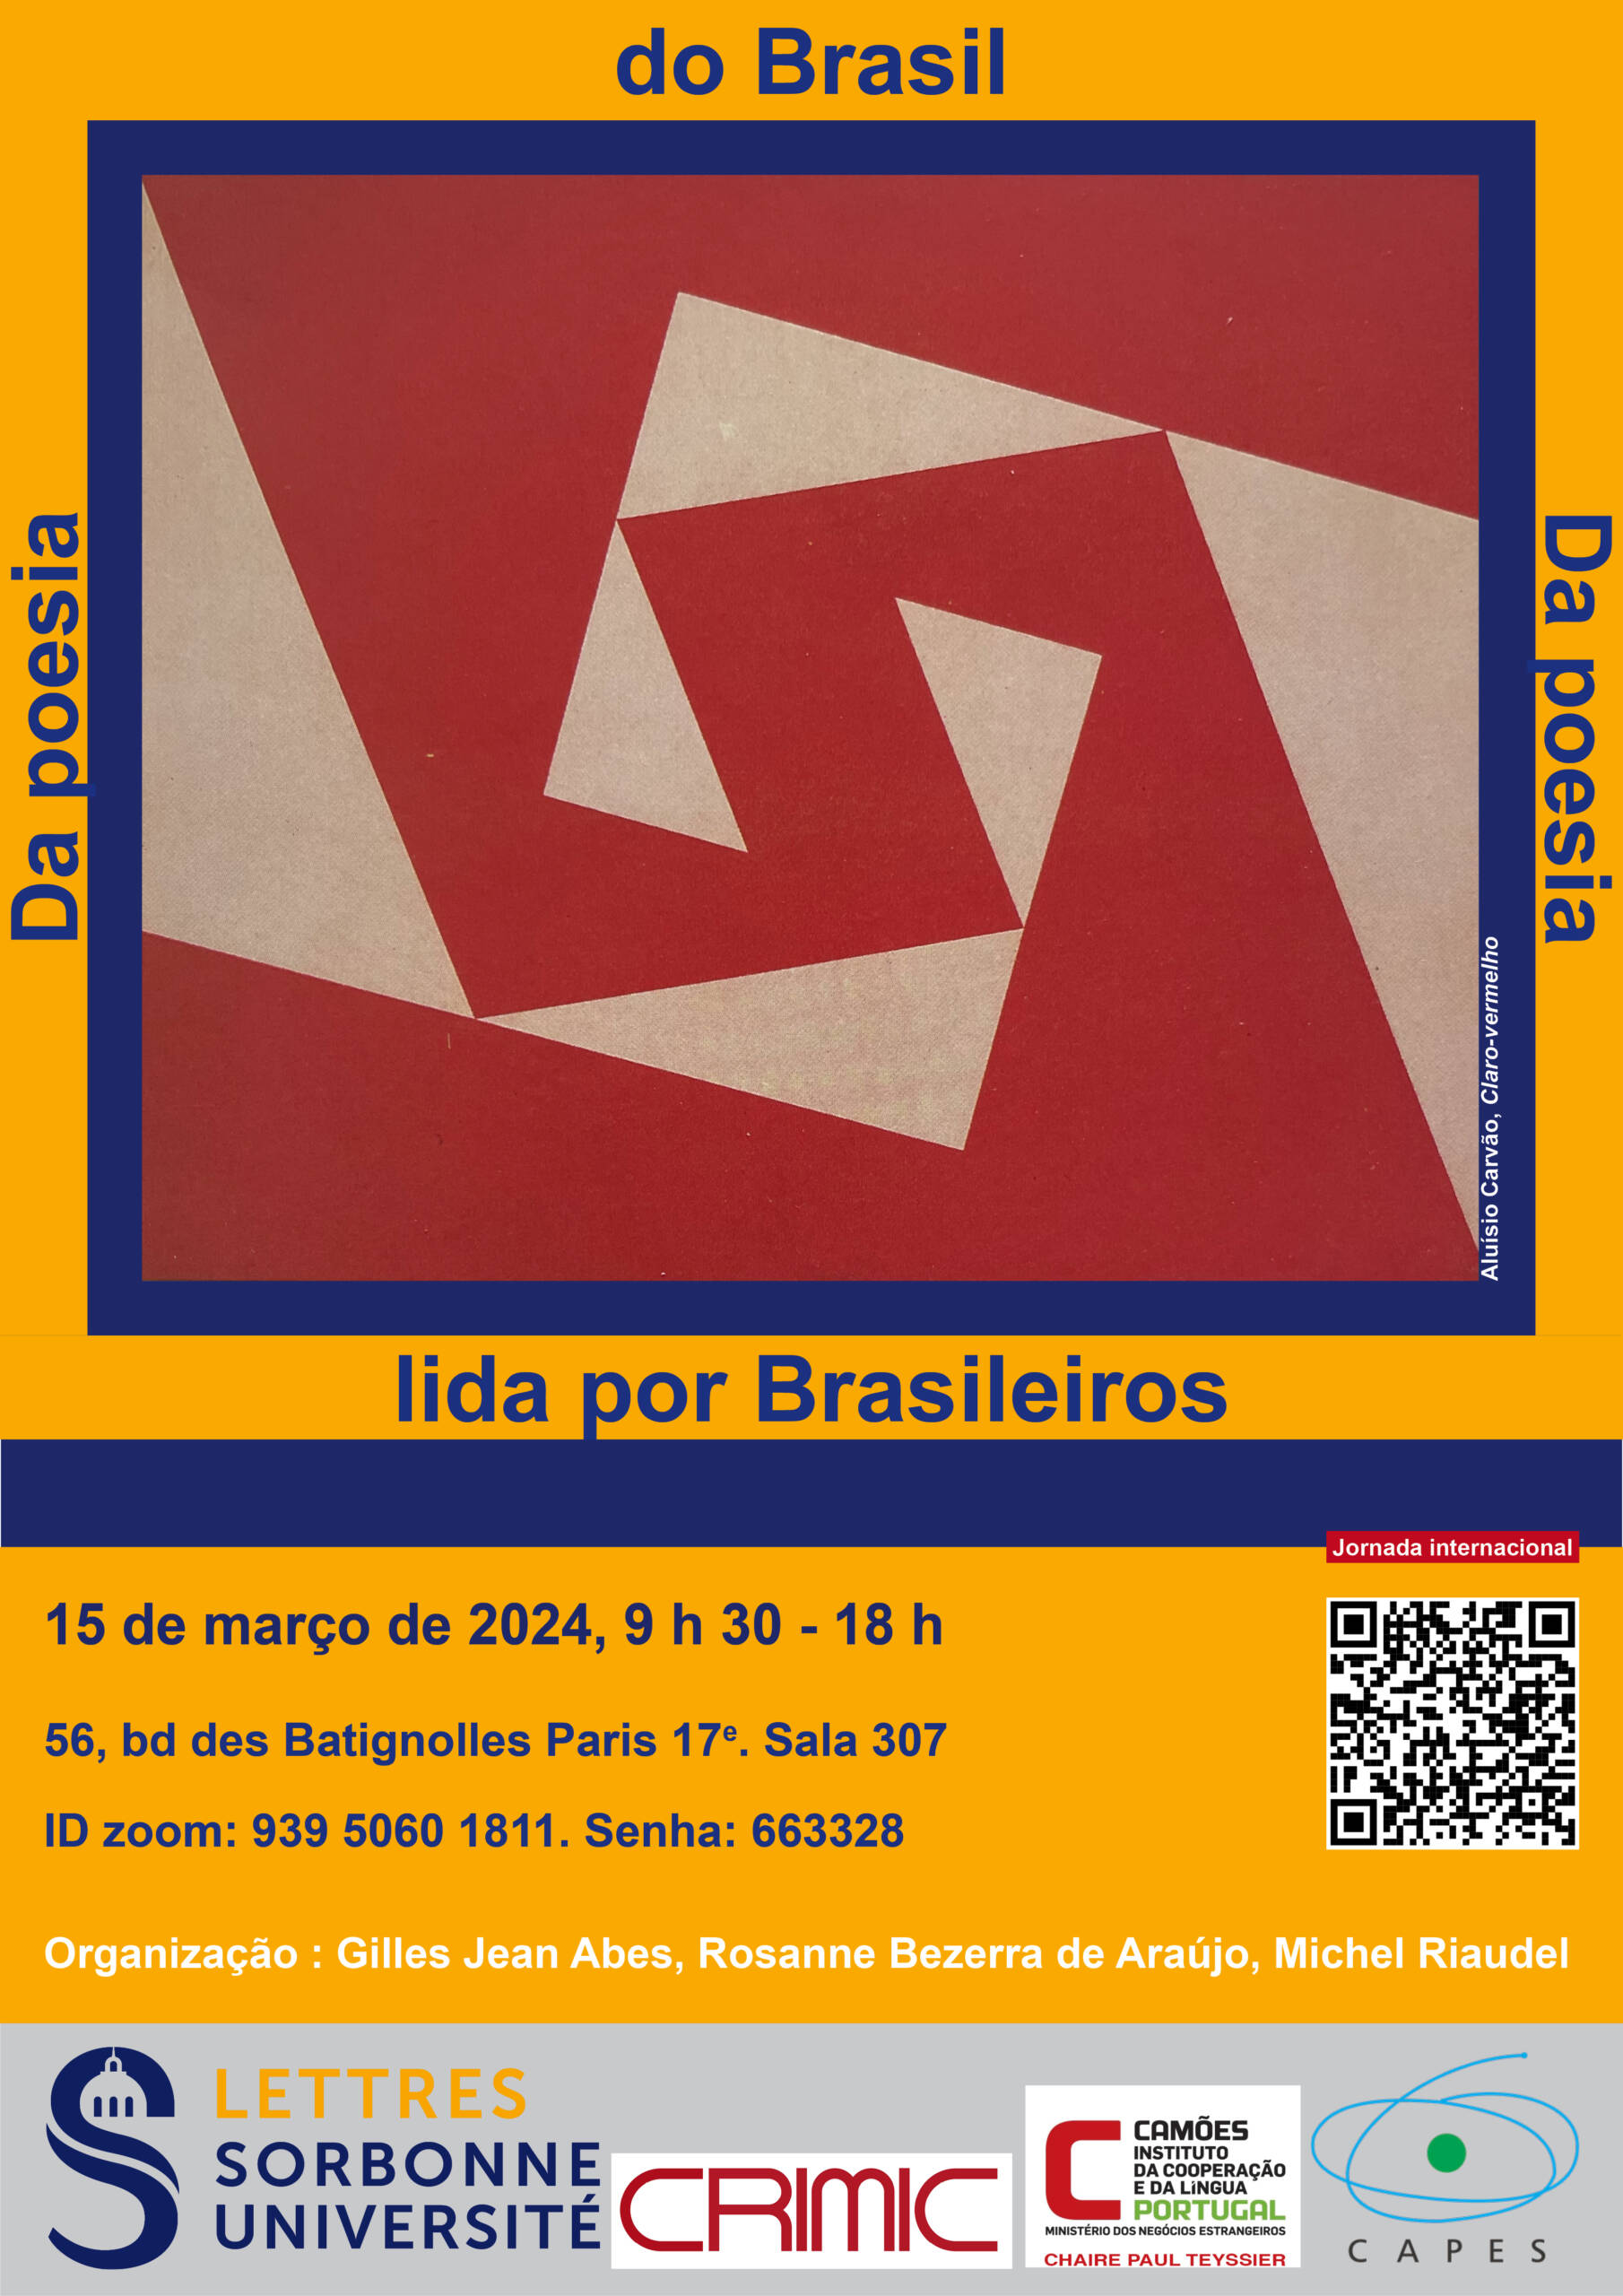 Poesia do Brasil, poesia lida por Brasileiros, jornada internacional